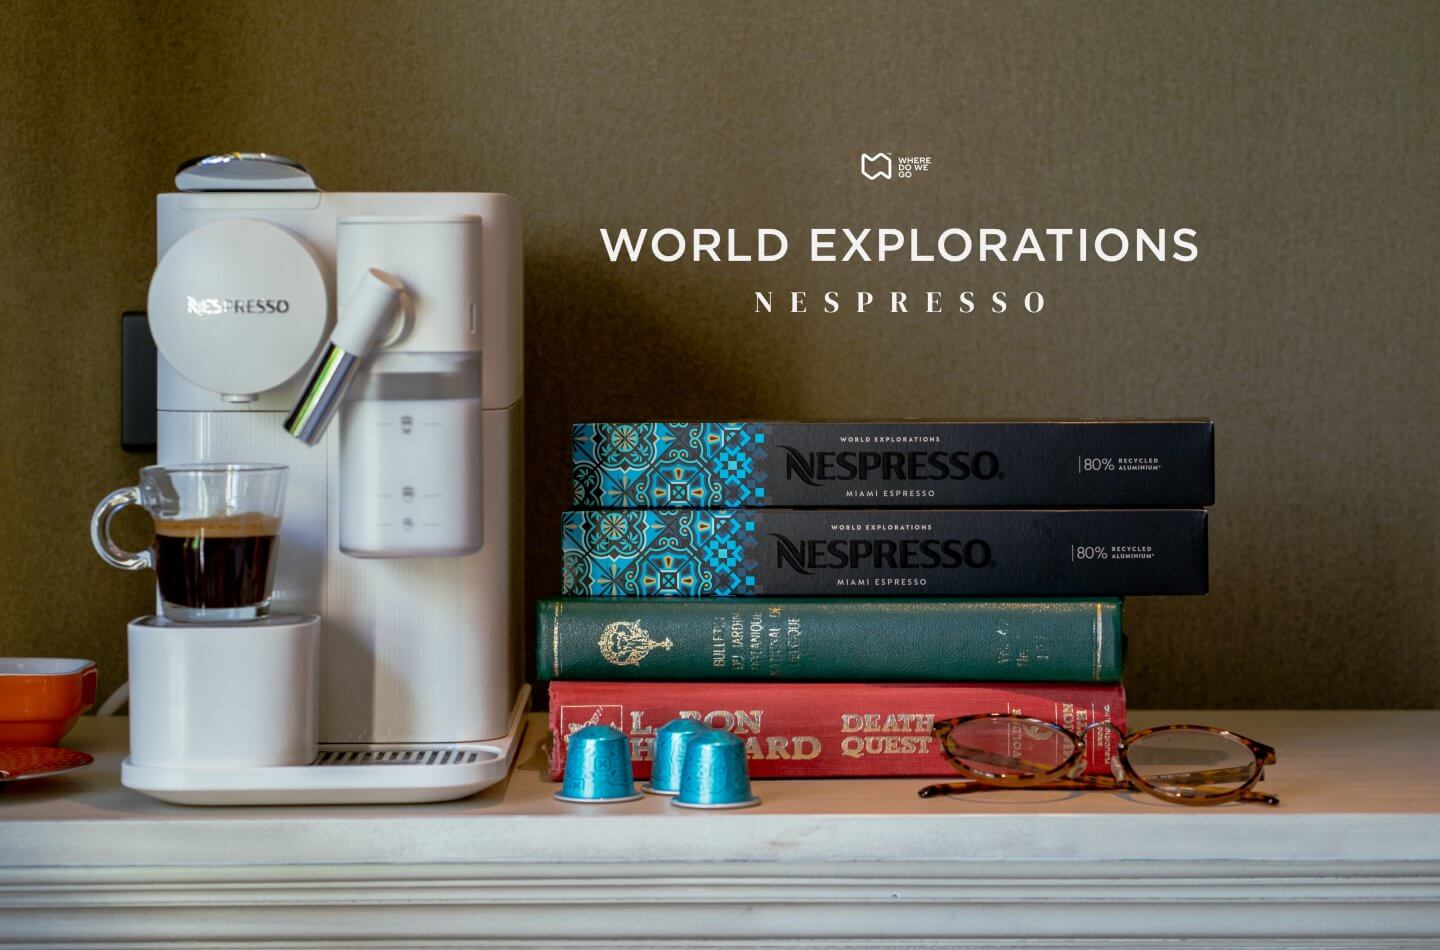 World Explorations with NESPRESSO